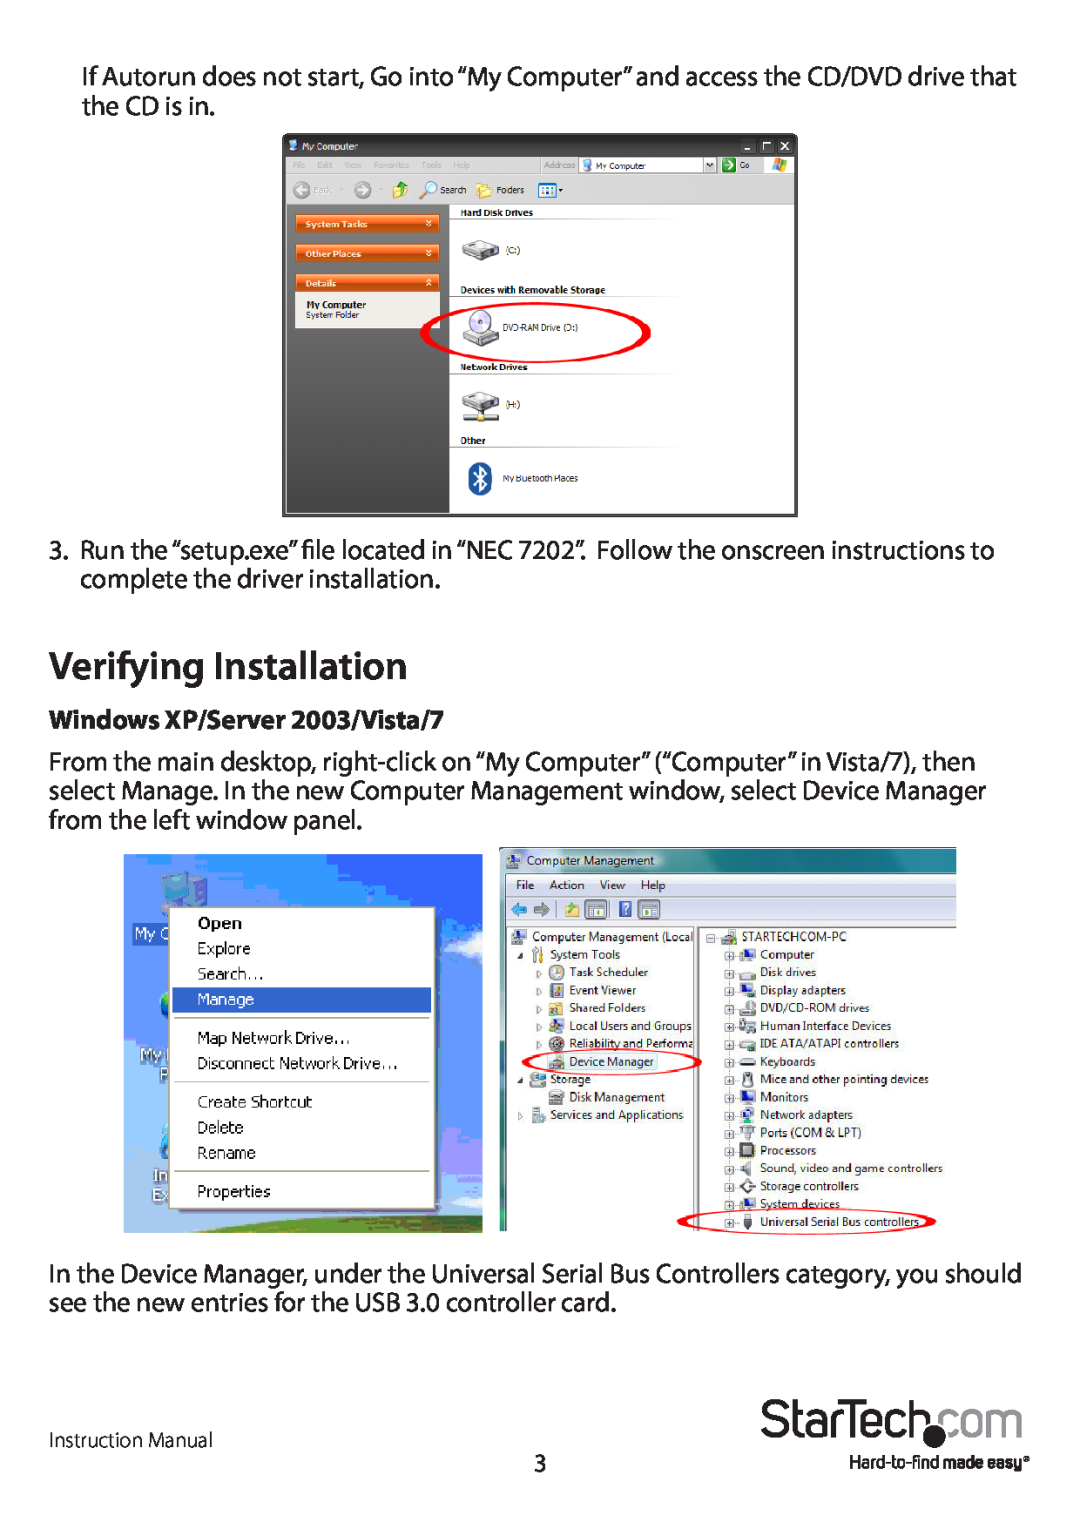 StarTech.com ecusb3s22 manual Verifying Installation, Windows XP/Server 2003/Vista/7 